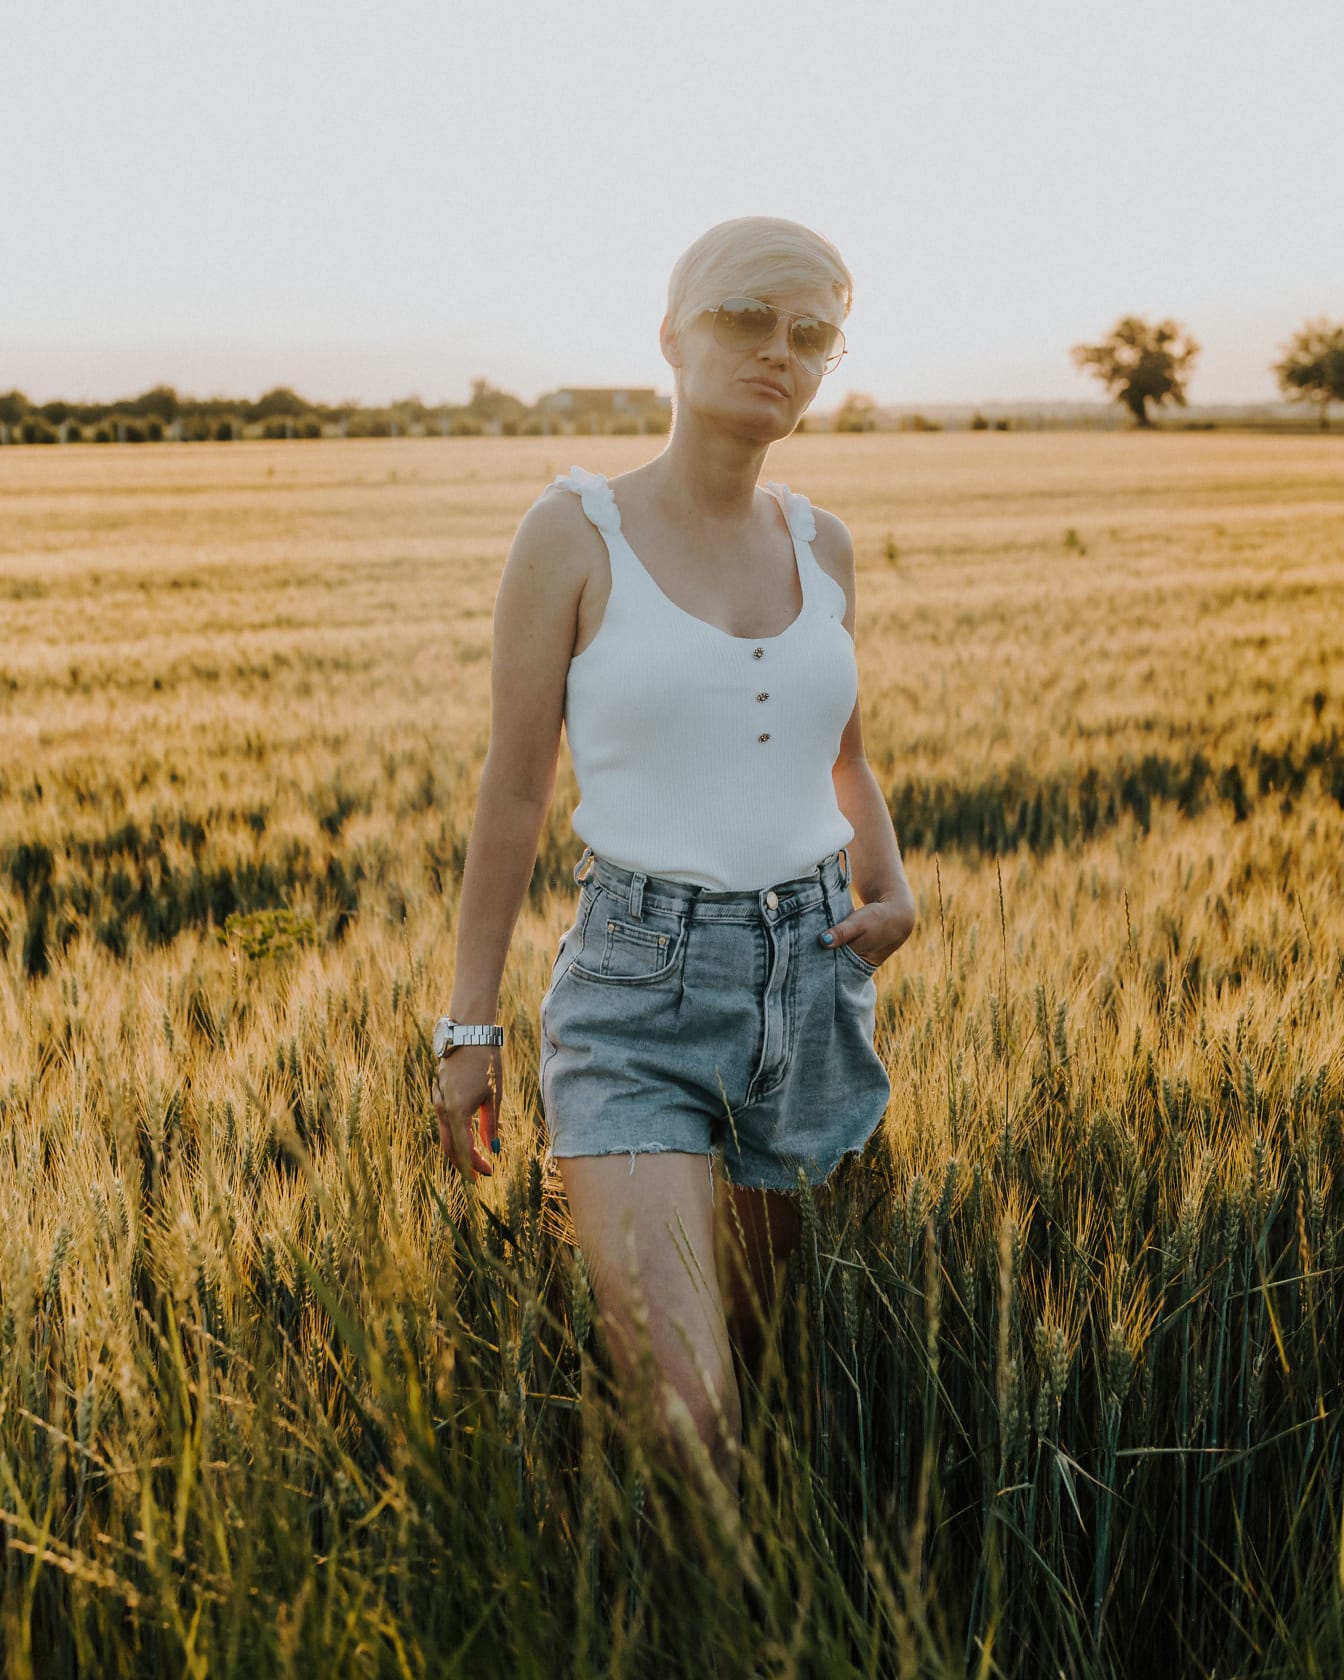 Het knappe blonde stellen in korte broek in korenveld